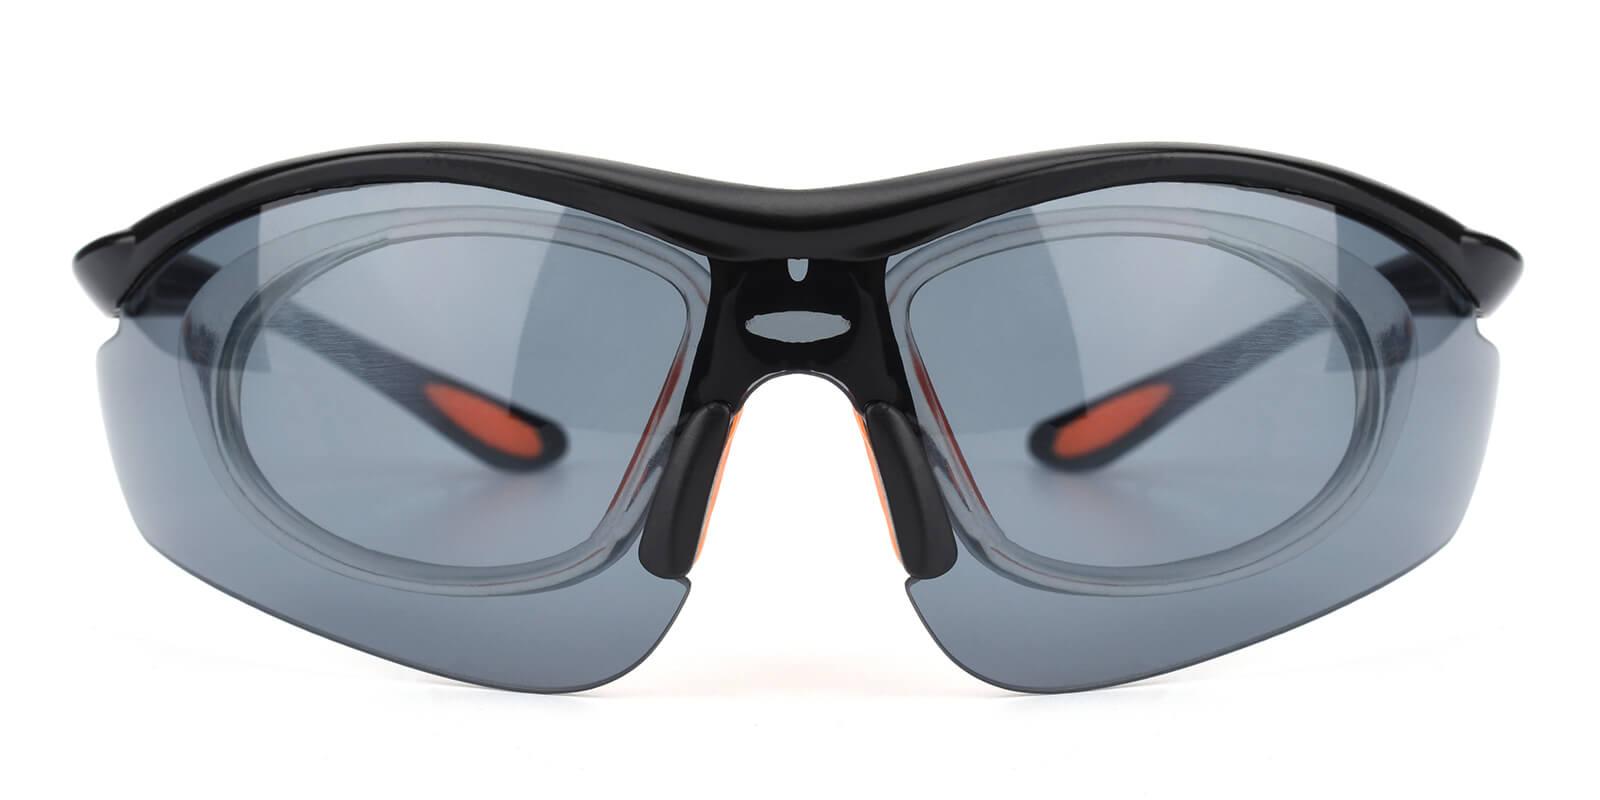 Preavey-Black-Square-Plastic-SportsGlasses-detail